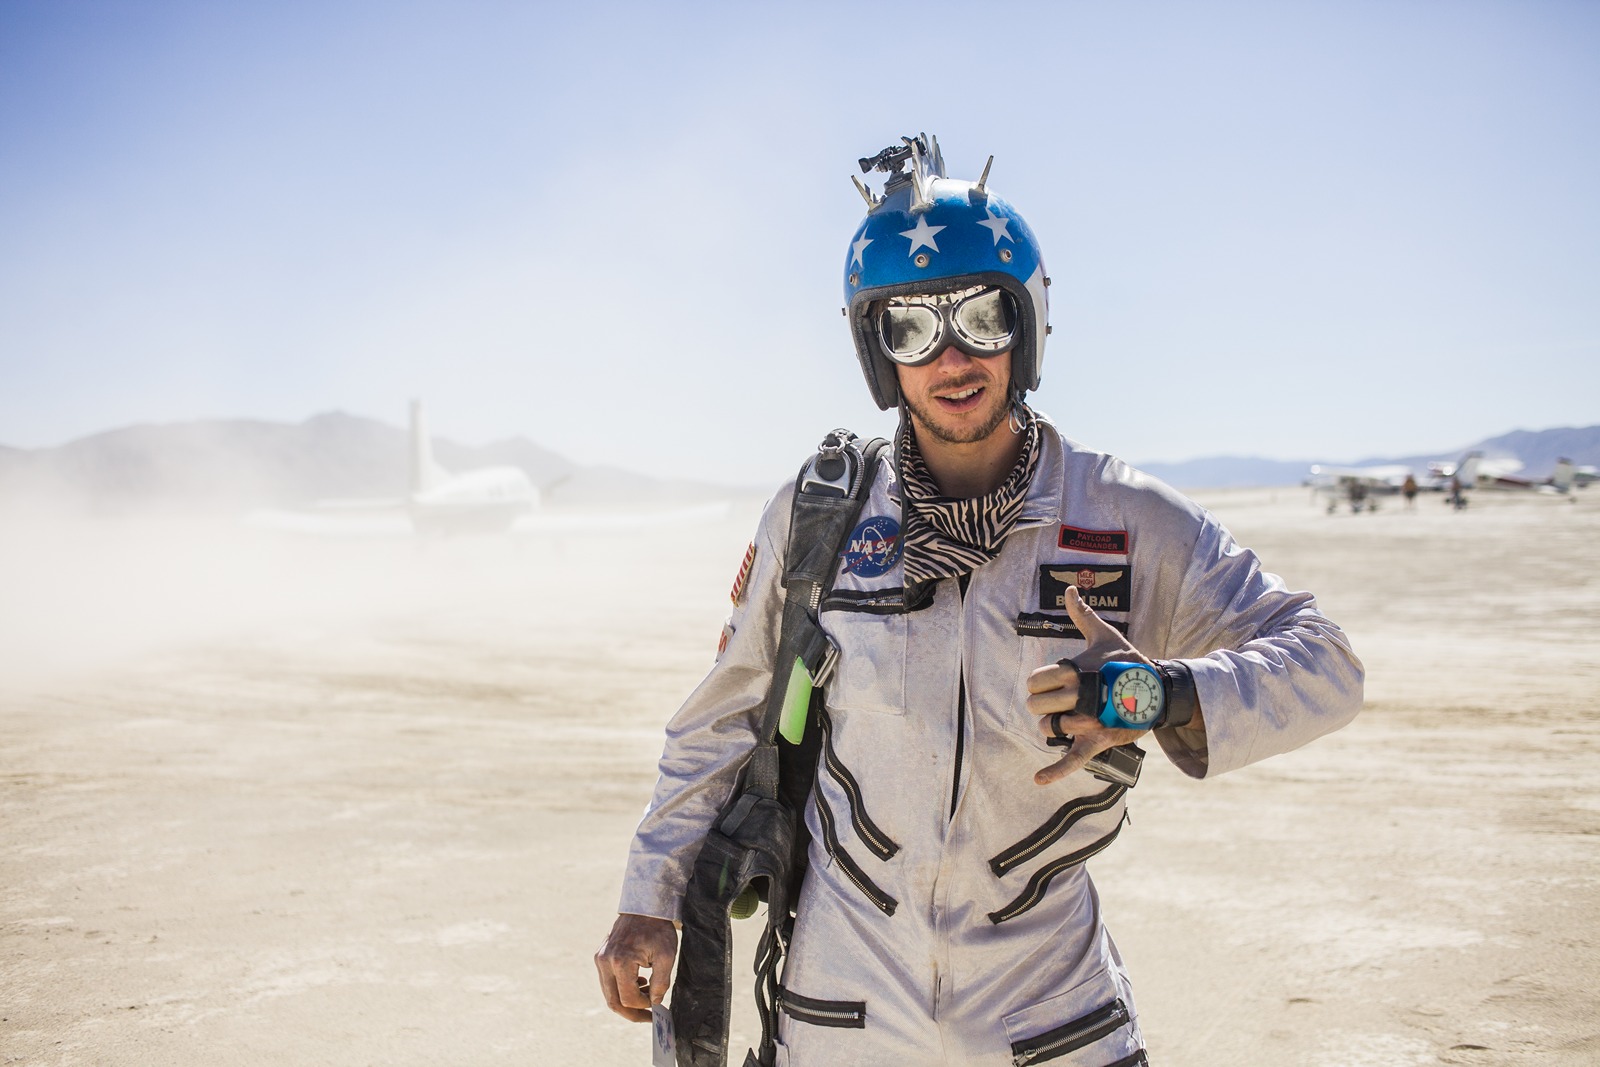 Burning Man - American skydiver